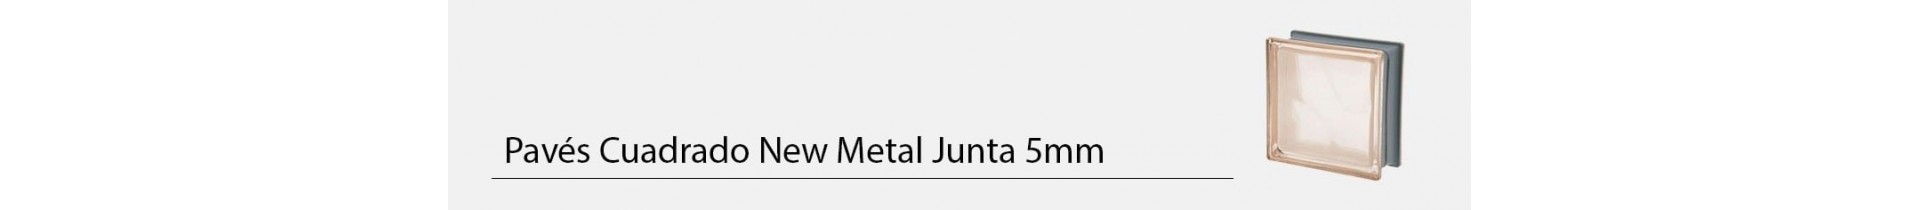 Pavés Cuadrado New Metal Junta 5mm